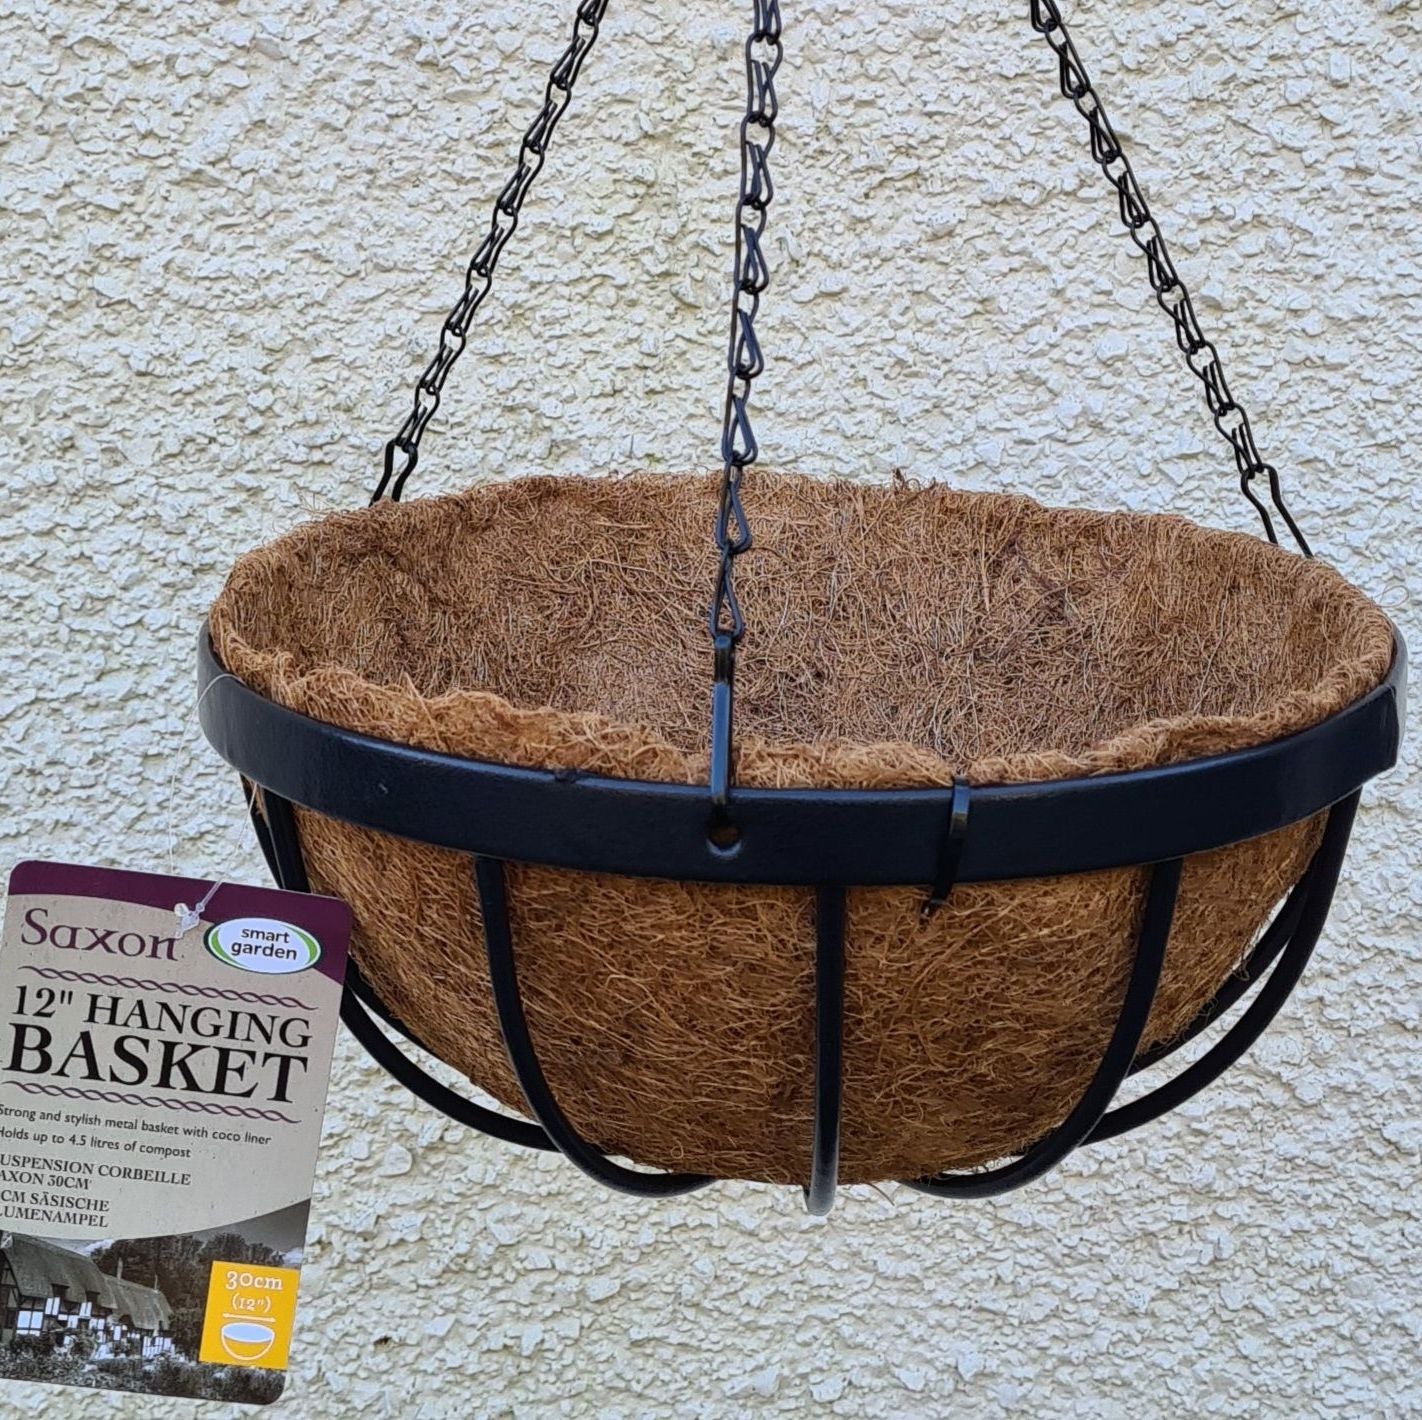 Smart Garden Saxon Metal Hanging Basket With Liner 12''